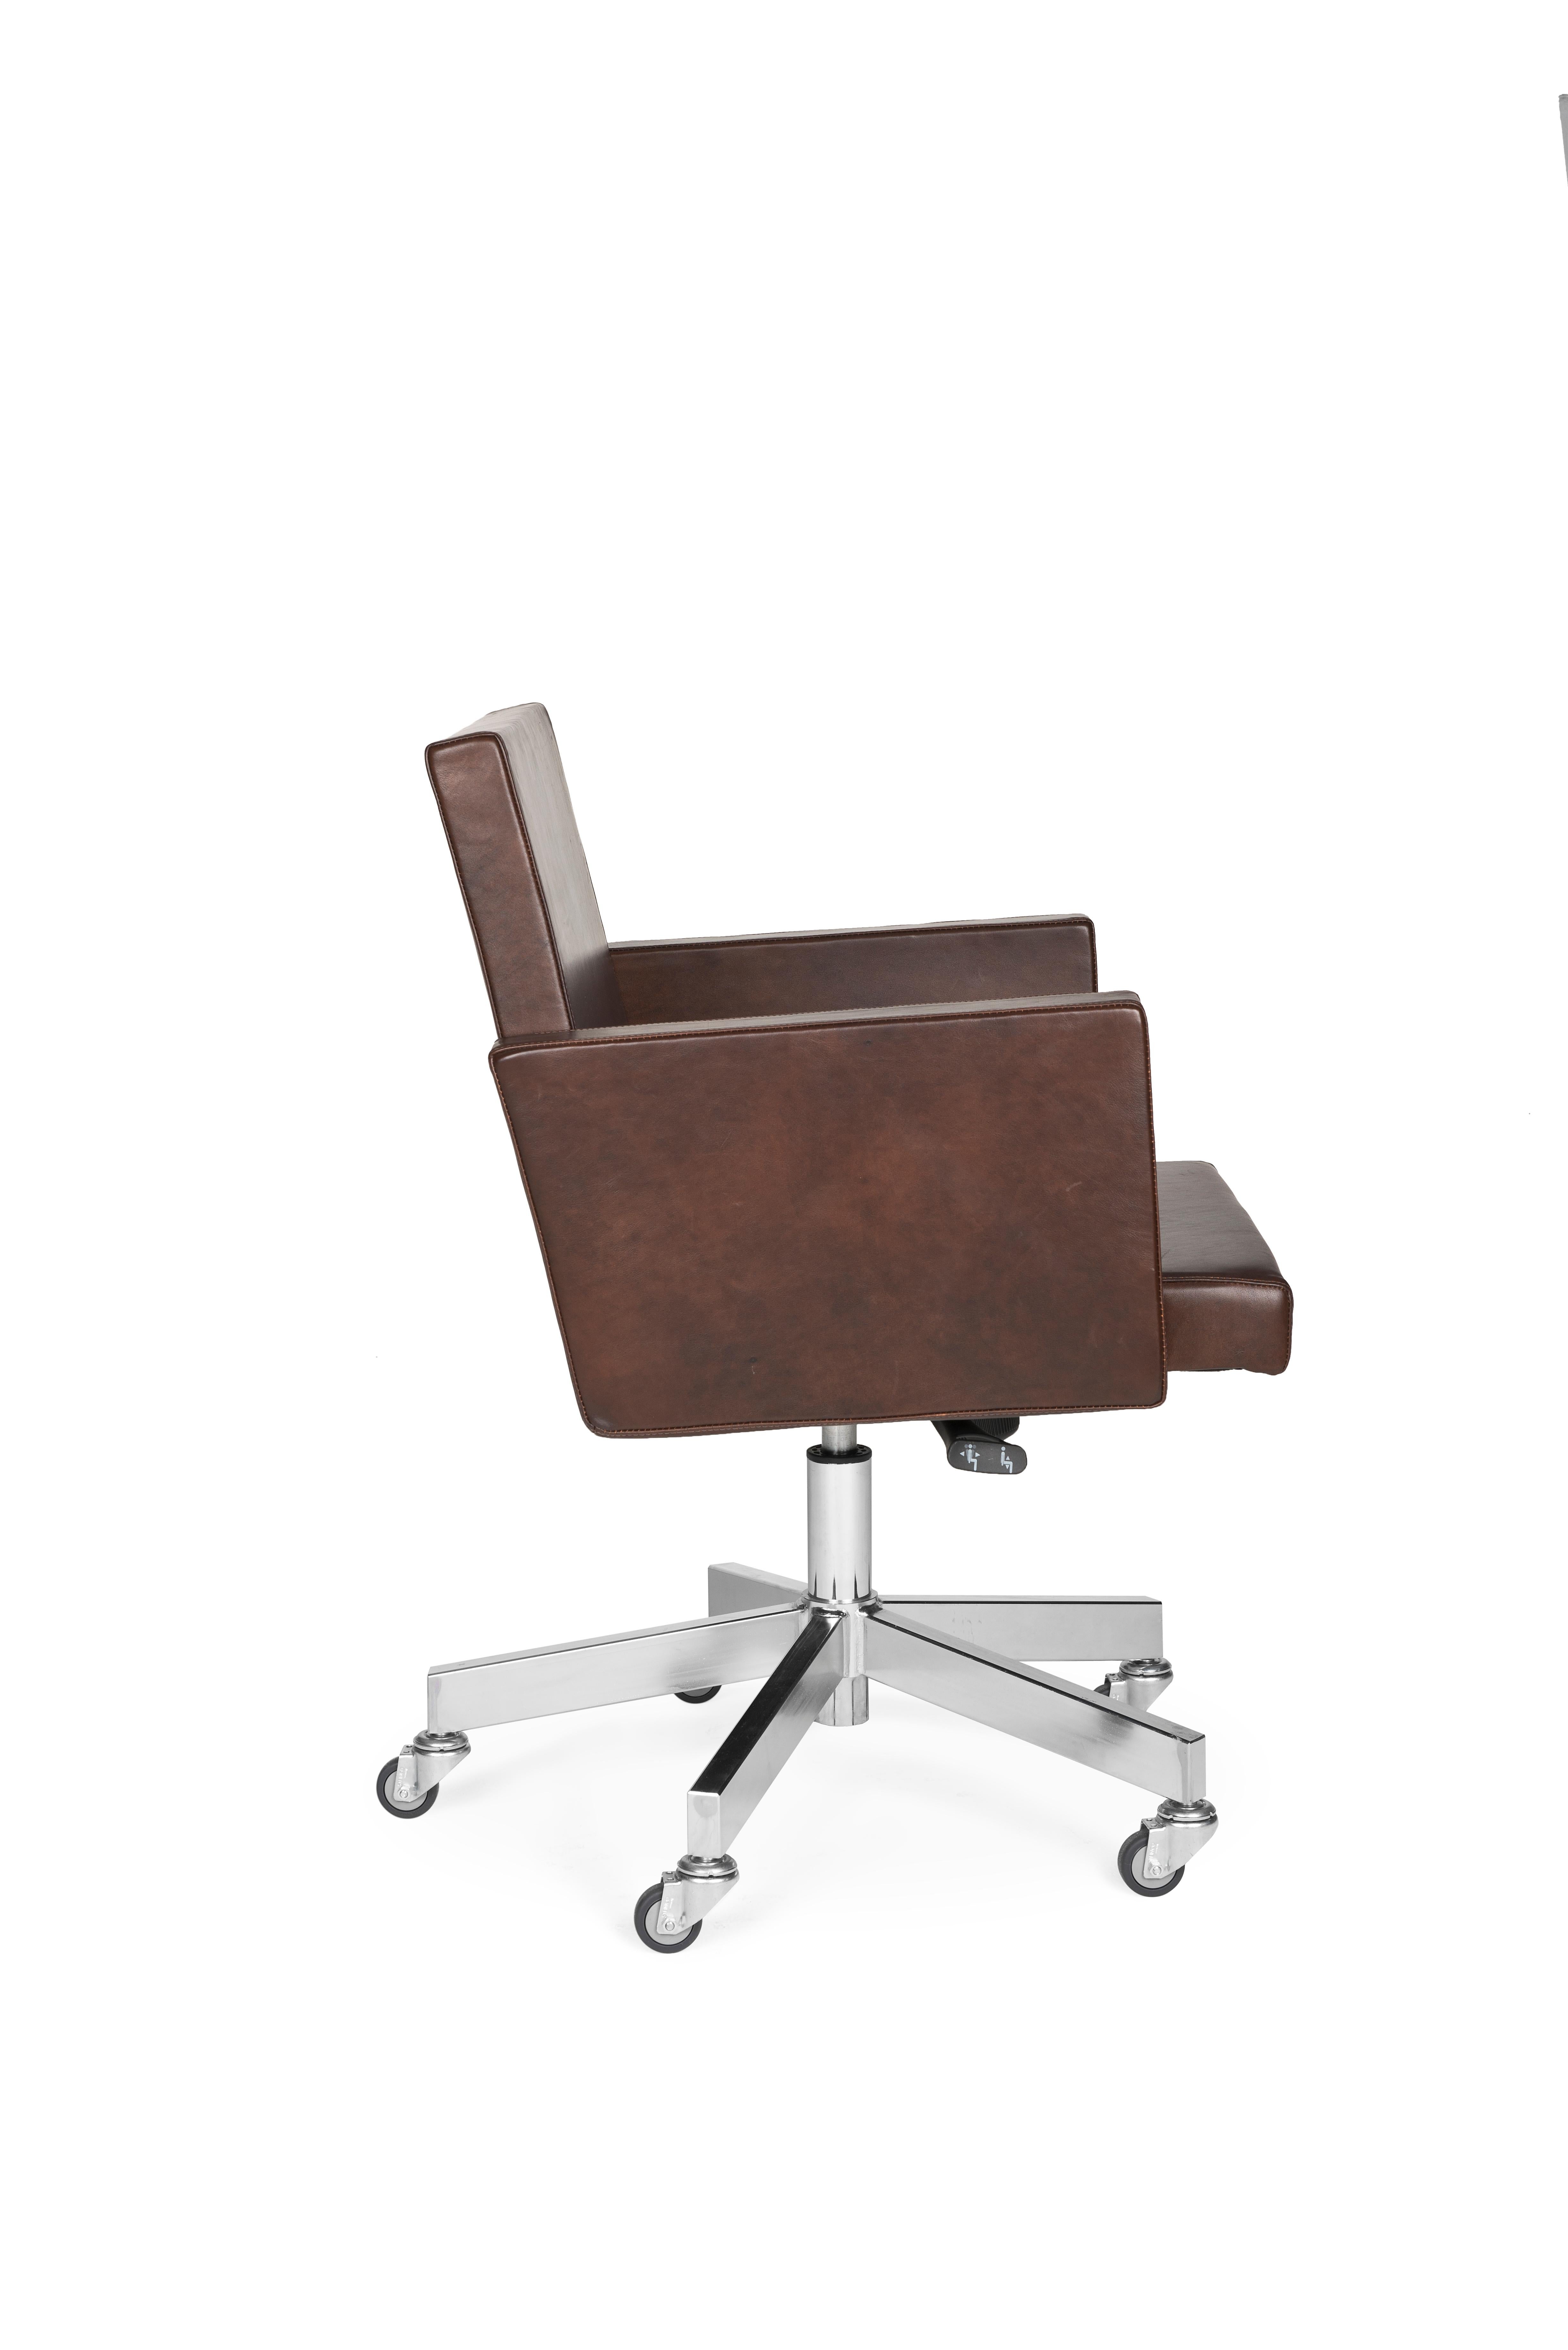 AVL-Bürostühle mit abgeschrägter Lehne (Moderne) im Angebot